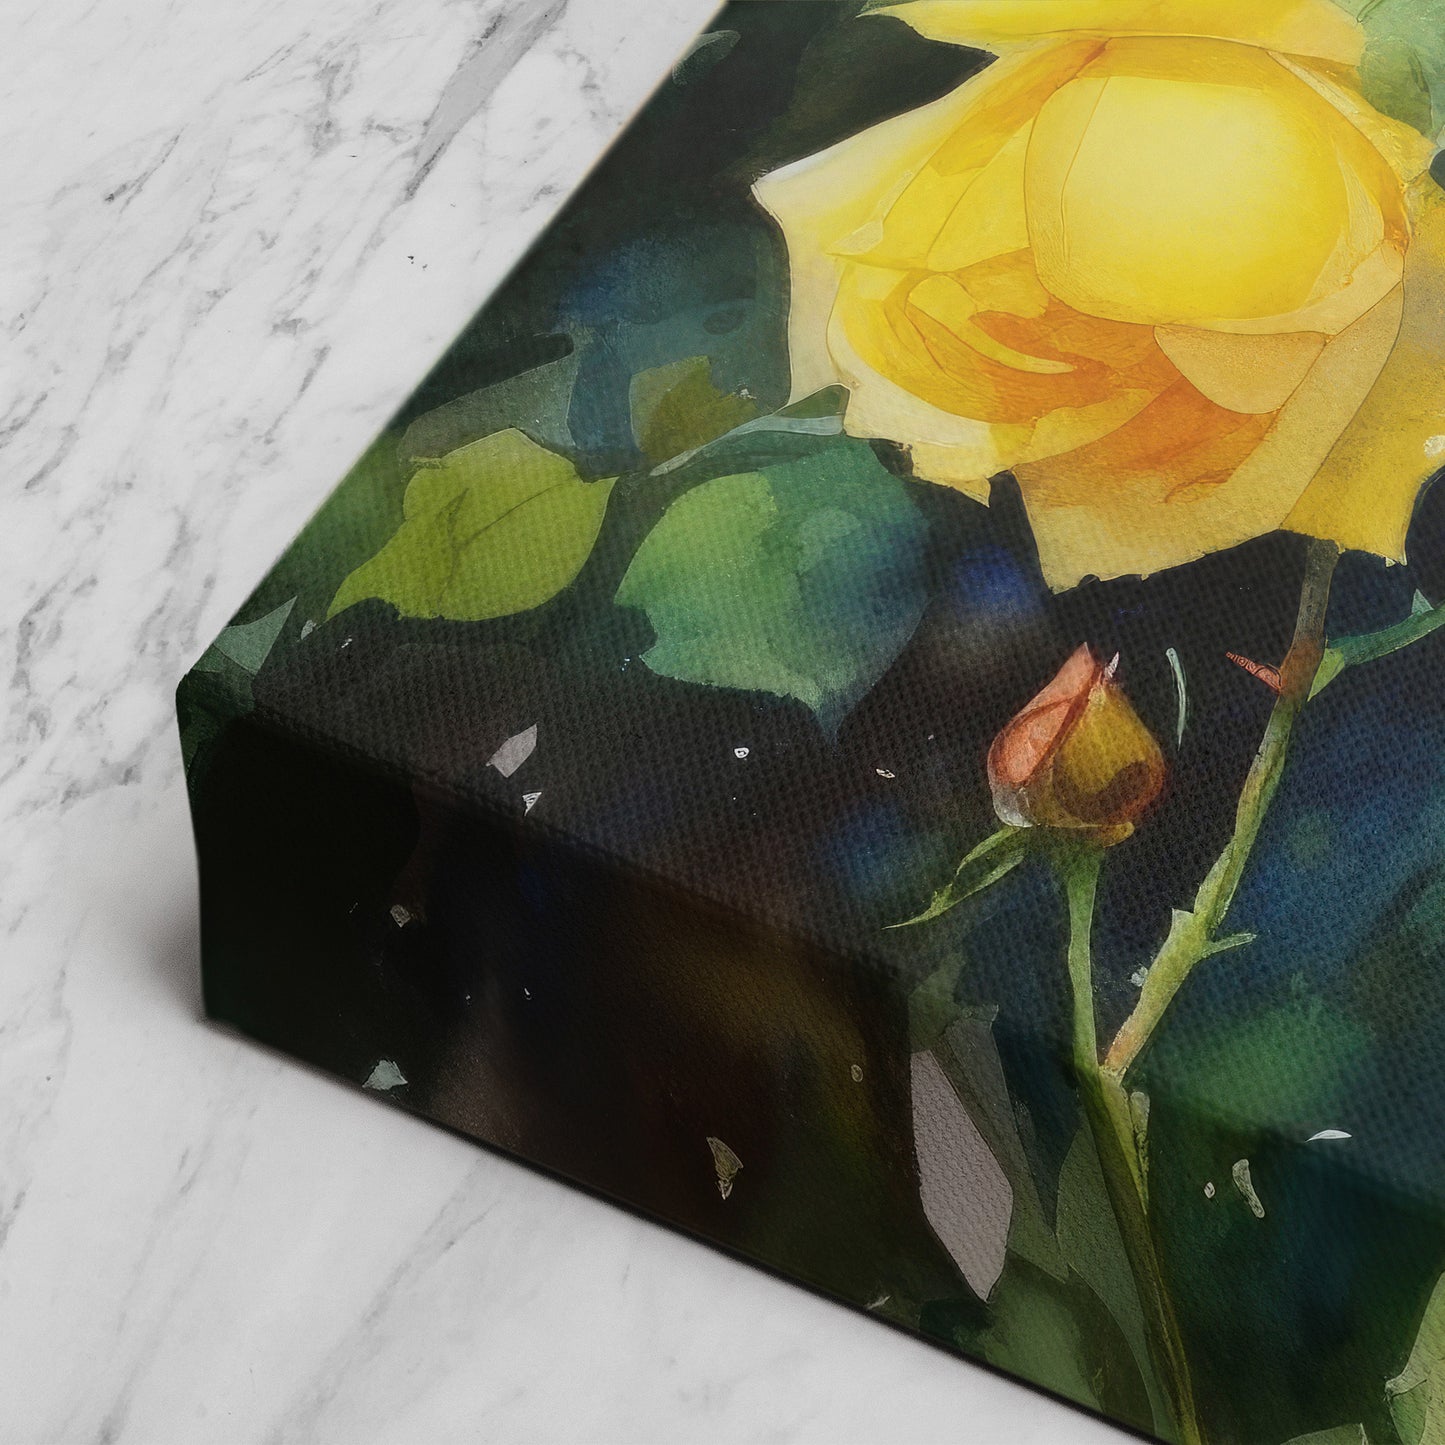 Rose Watercolor – Yellow Floral Botanical Art